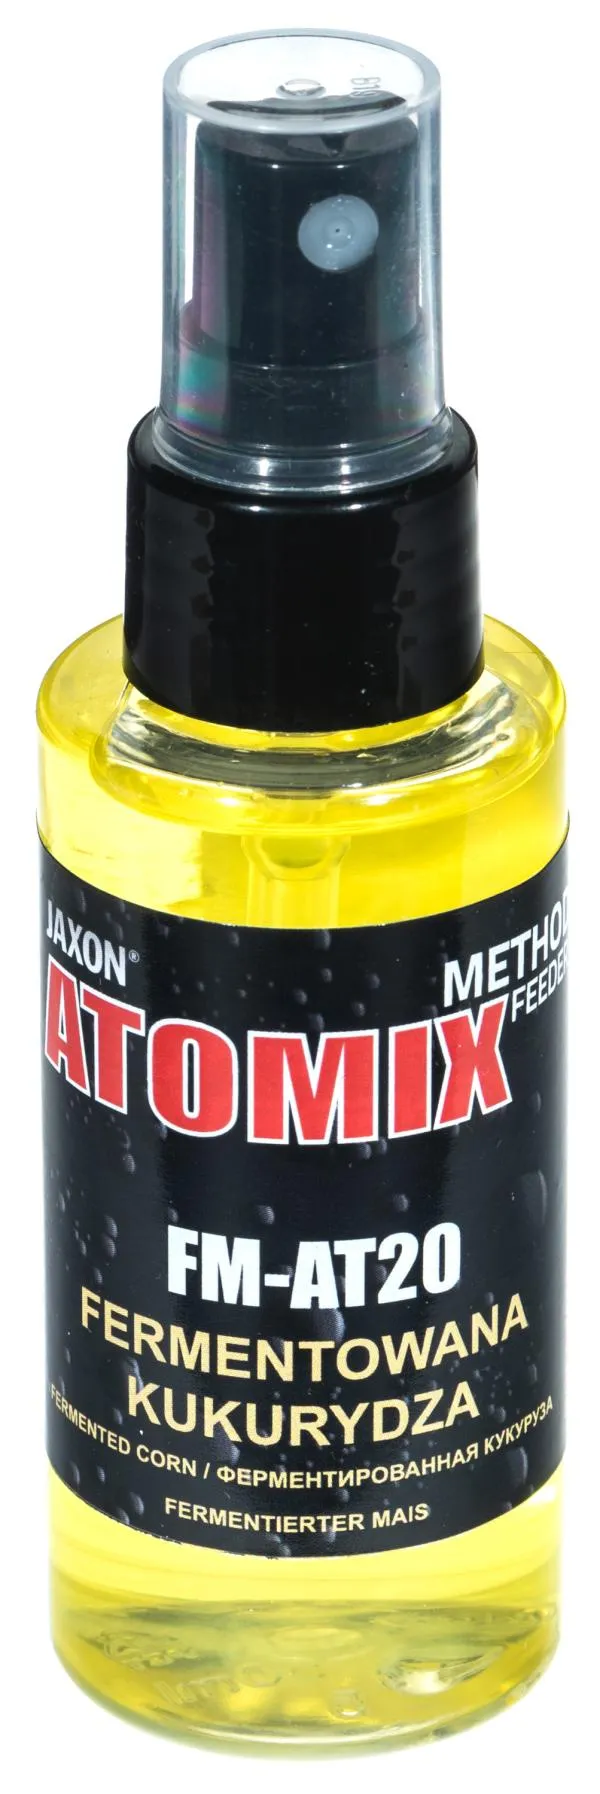 JAXON ATOMIX - FERMENTED CORN 50g aroma